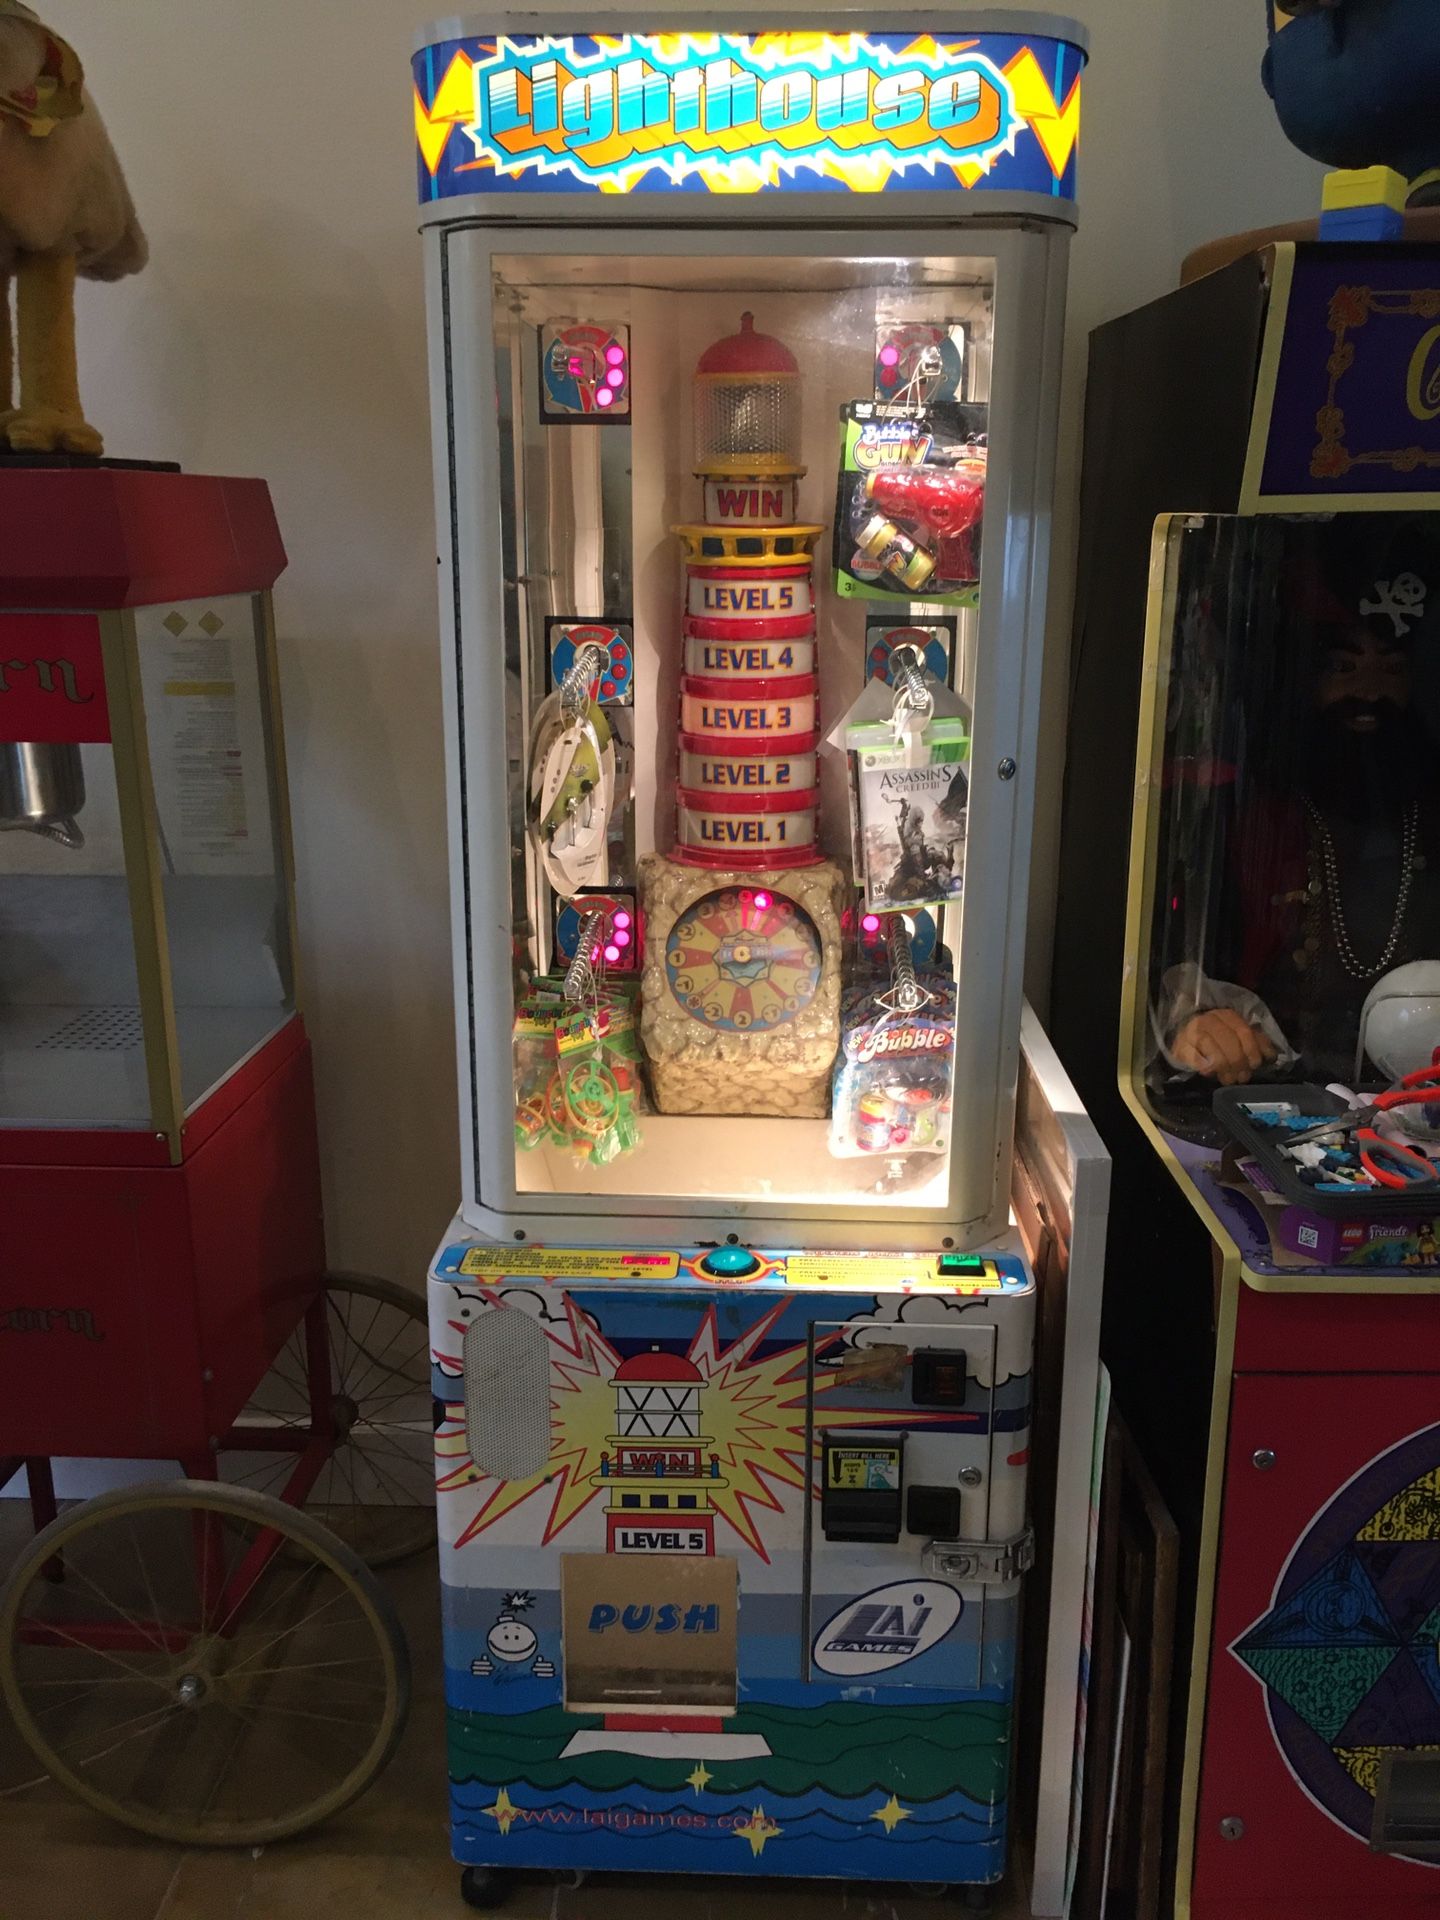 Light house arcade prize machine